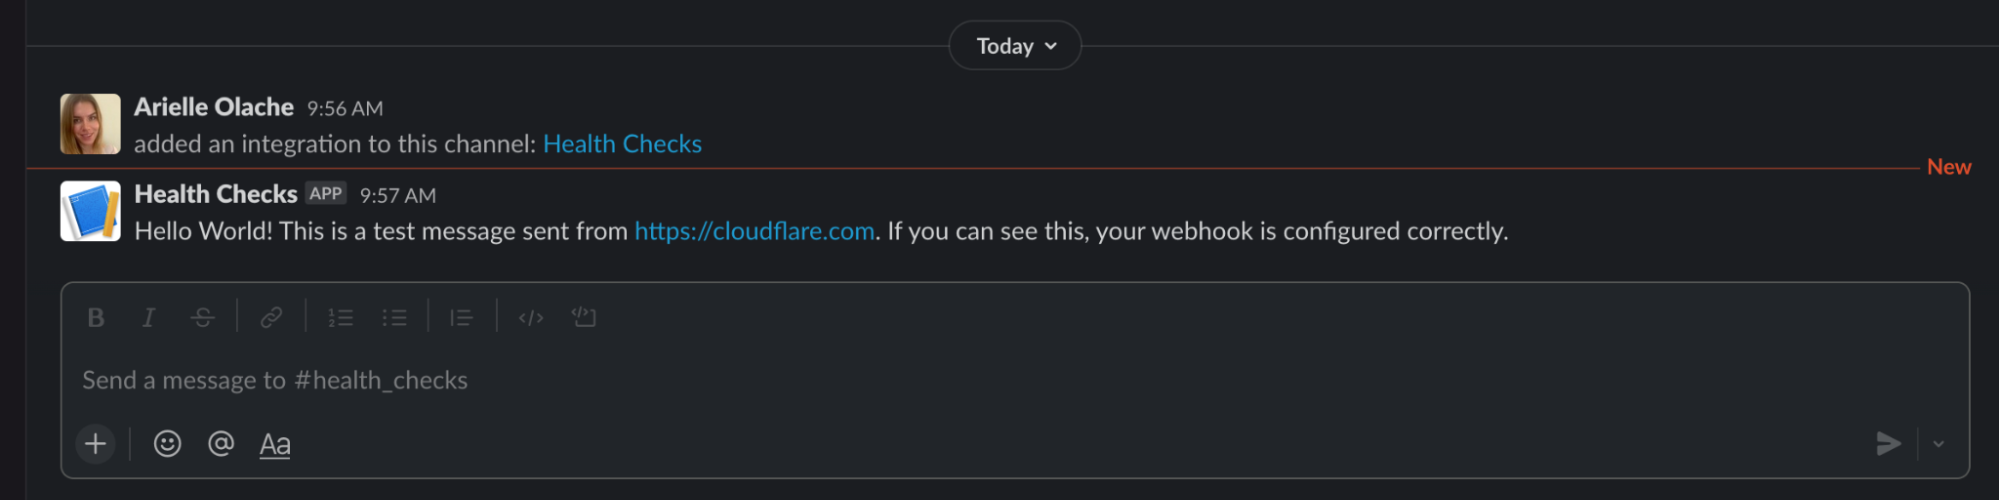 Message sent in Slack via the configured webhook, verifying the webhook is working